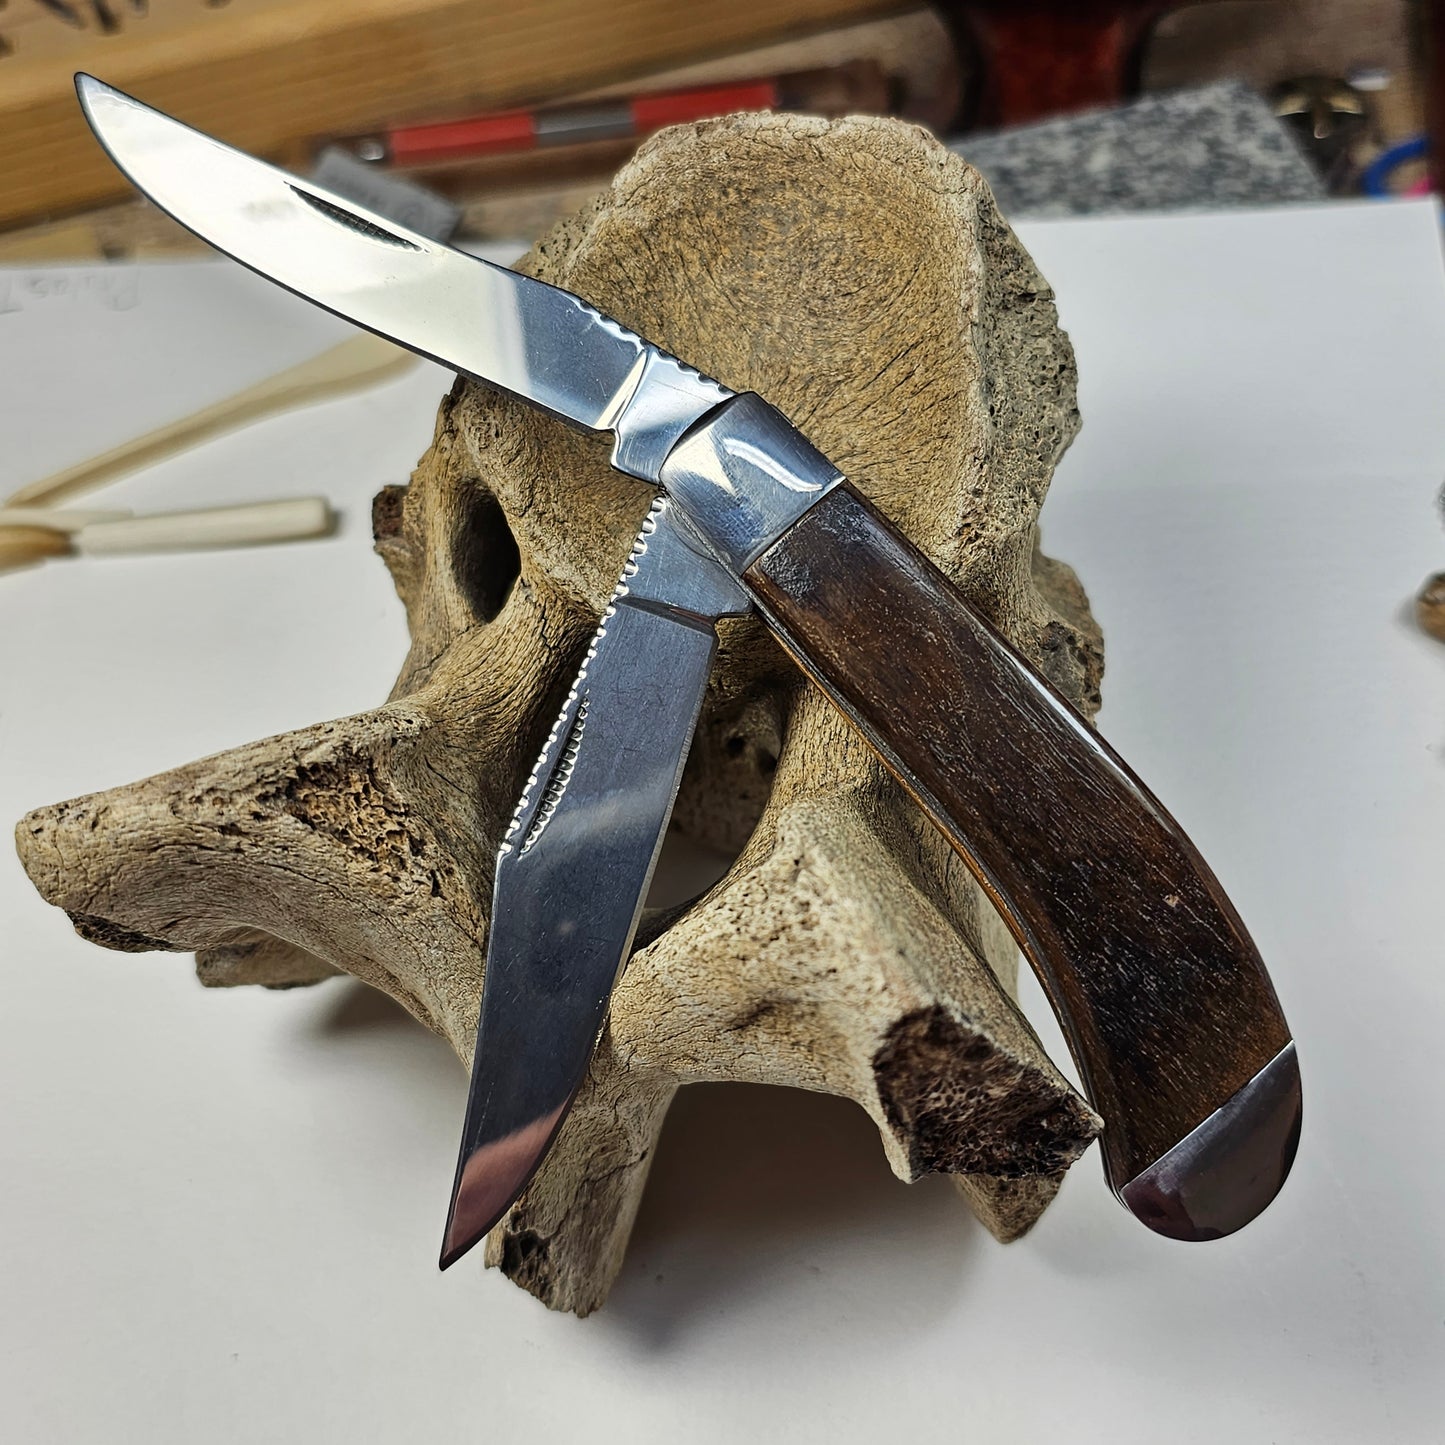 Boneyard Woolly Mammoth Ivory and Bone Grip TRAPPER Pocket Knife